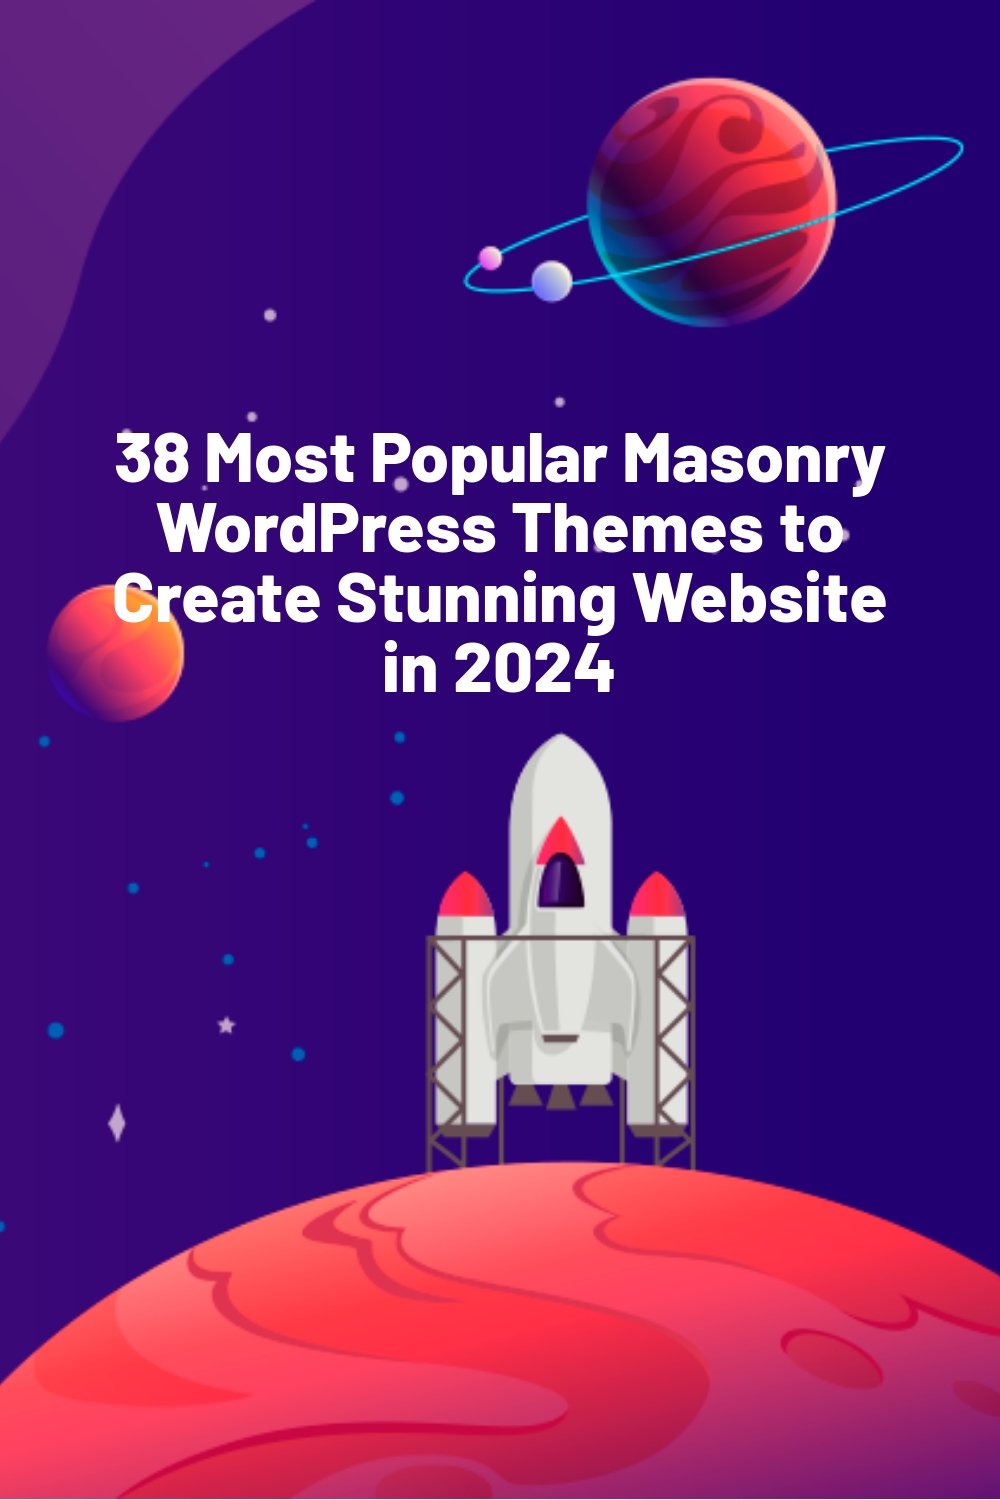 38 Most Popular Masonry WordPress Themes to Create Stunning Website in 2024